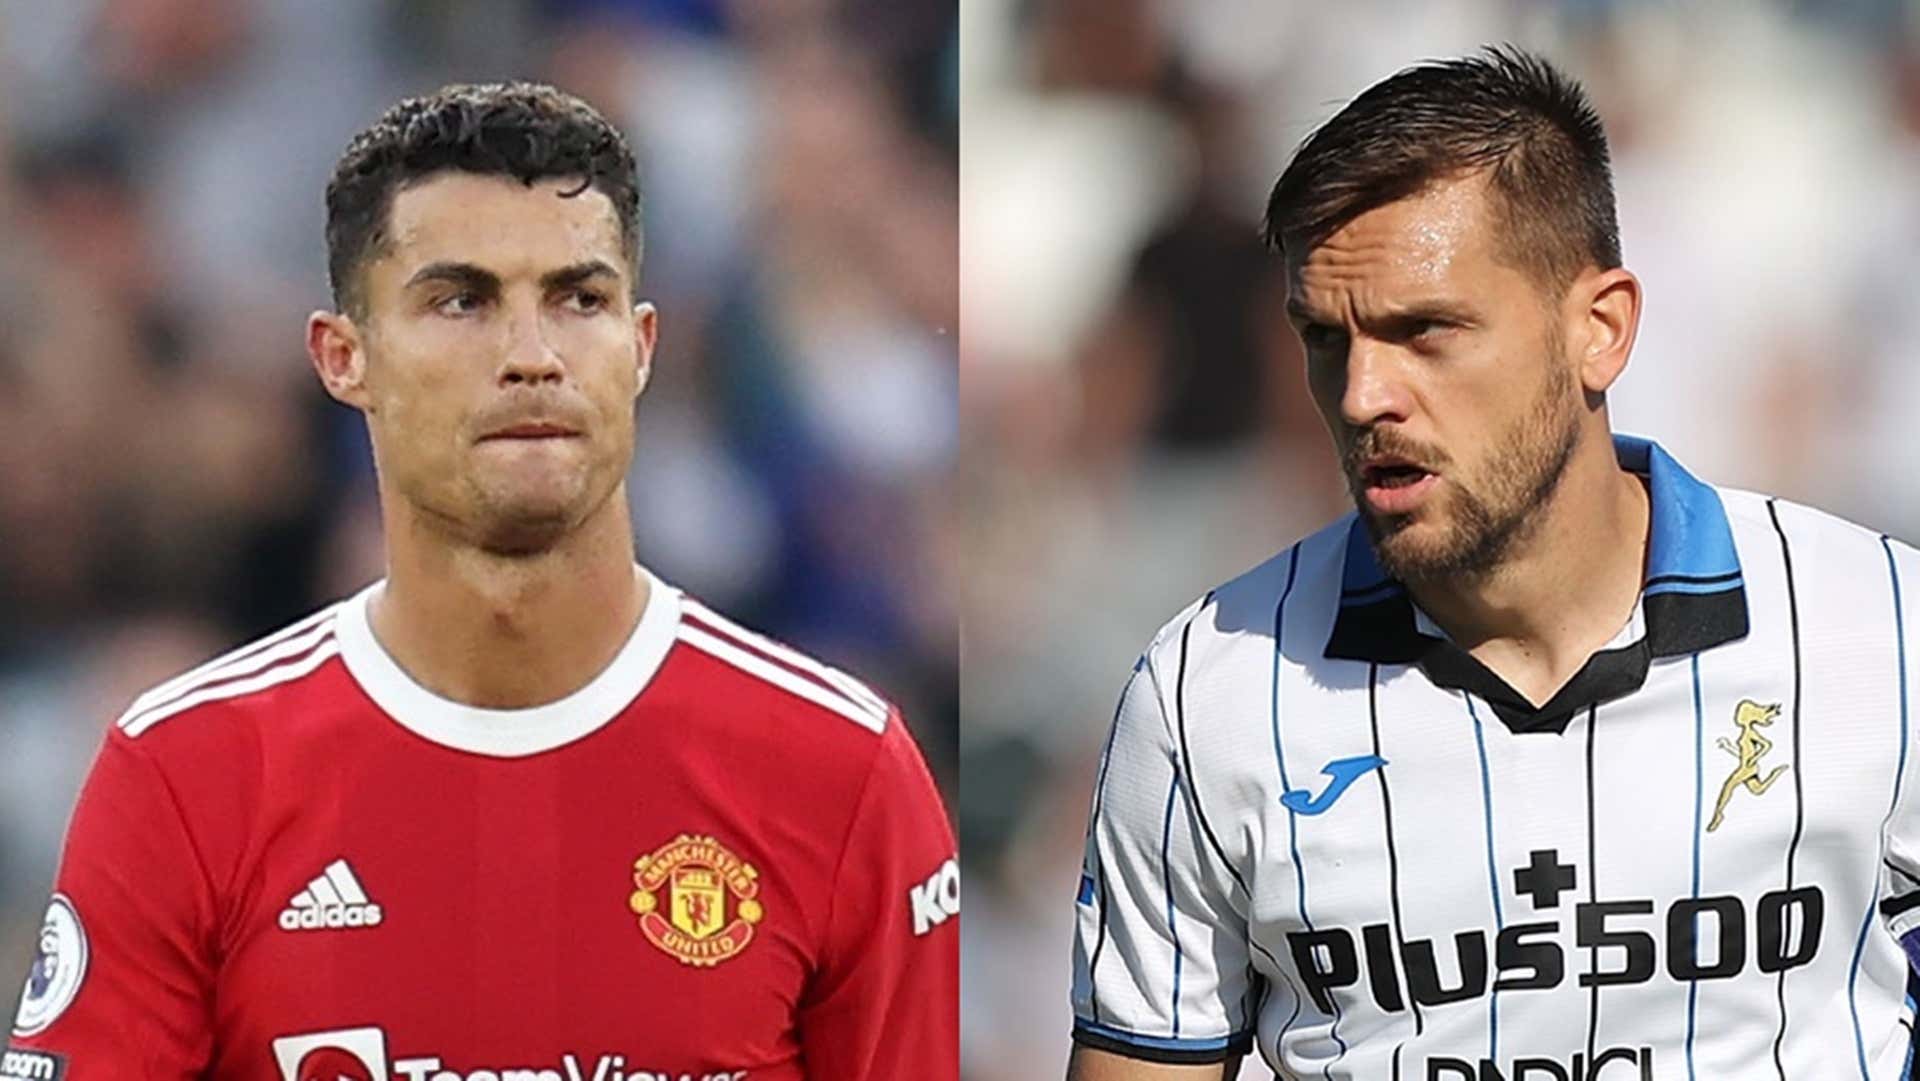 MP_Cristiano Ronaldo_Manchester United vs Rafael Toloi_Atalanta